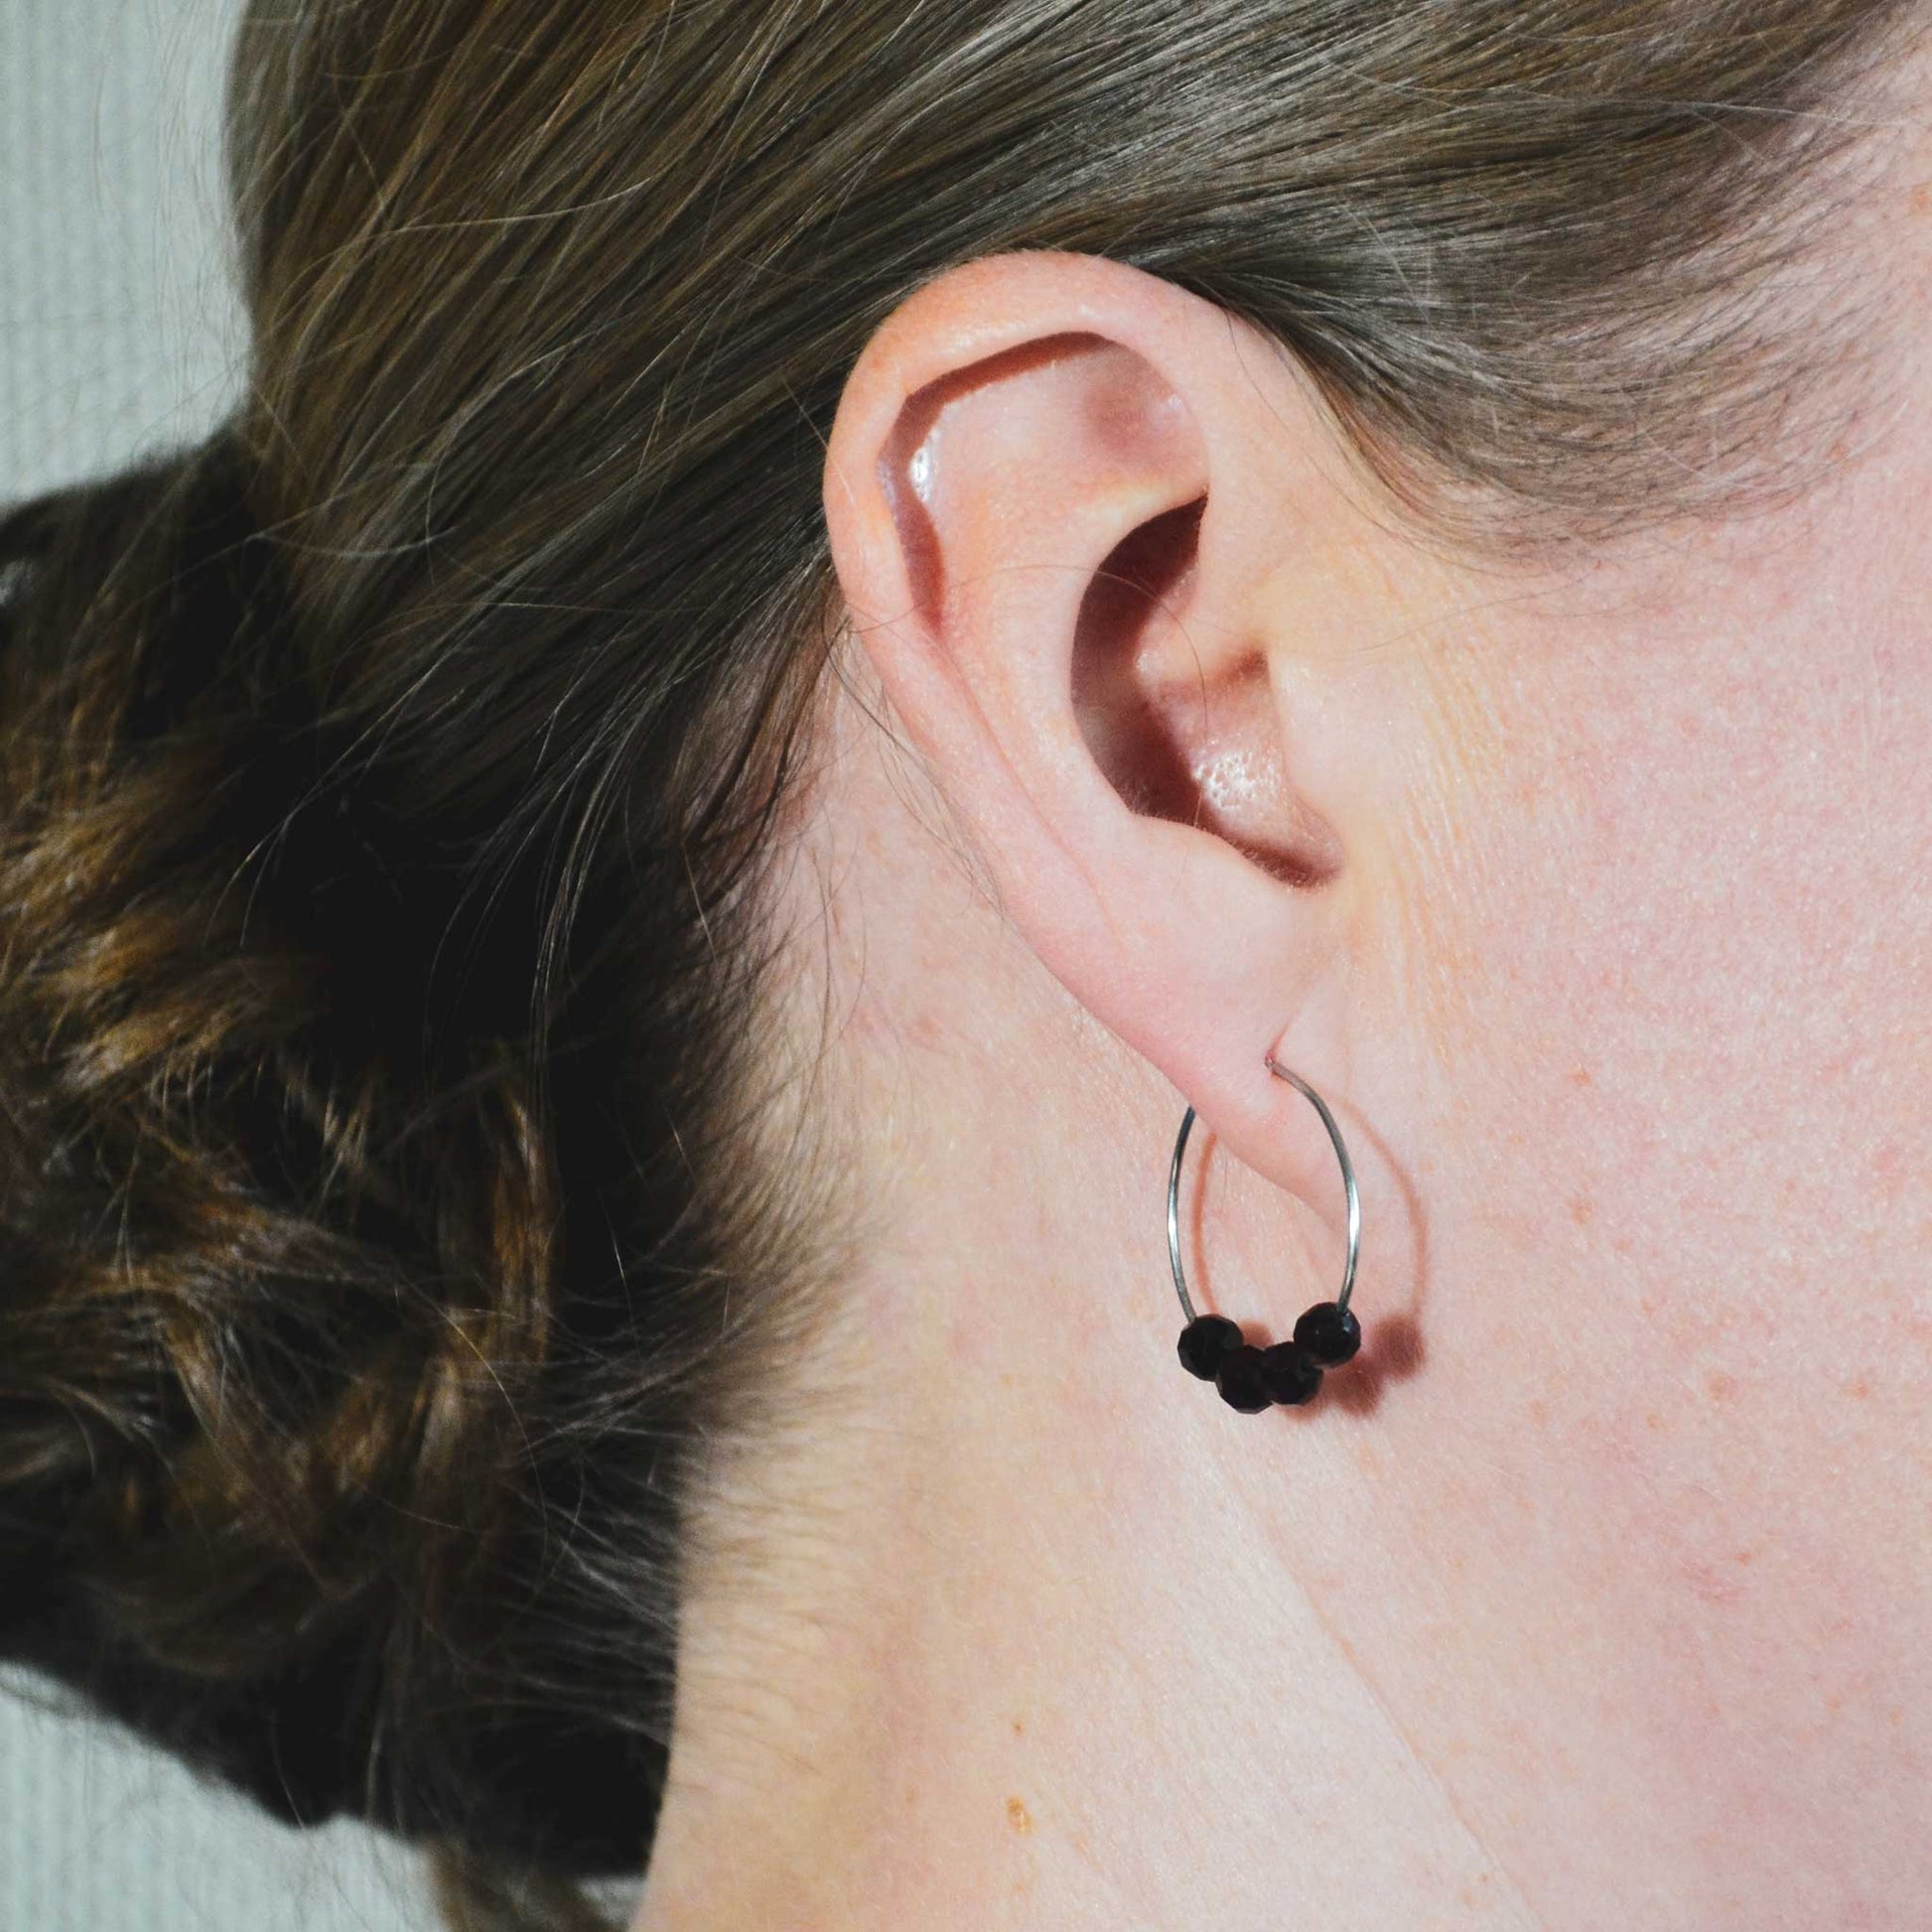 Woman wearing dark red Garnet hoop earrings in earlobe